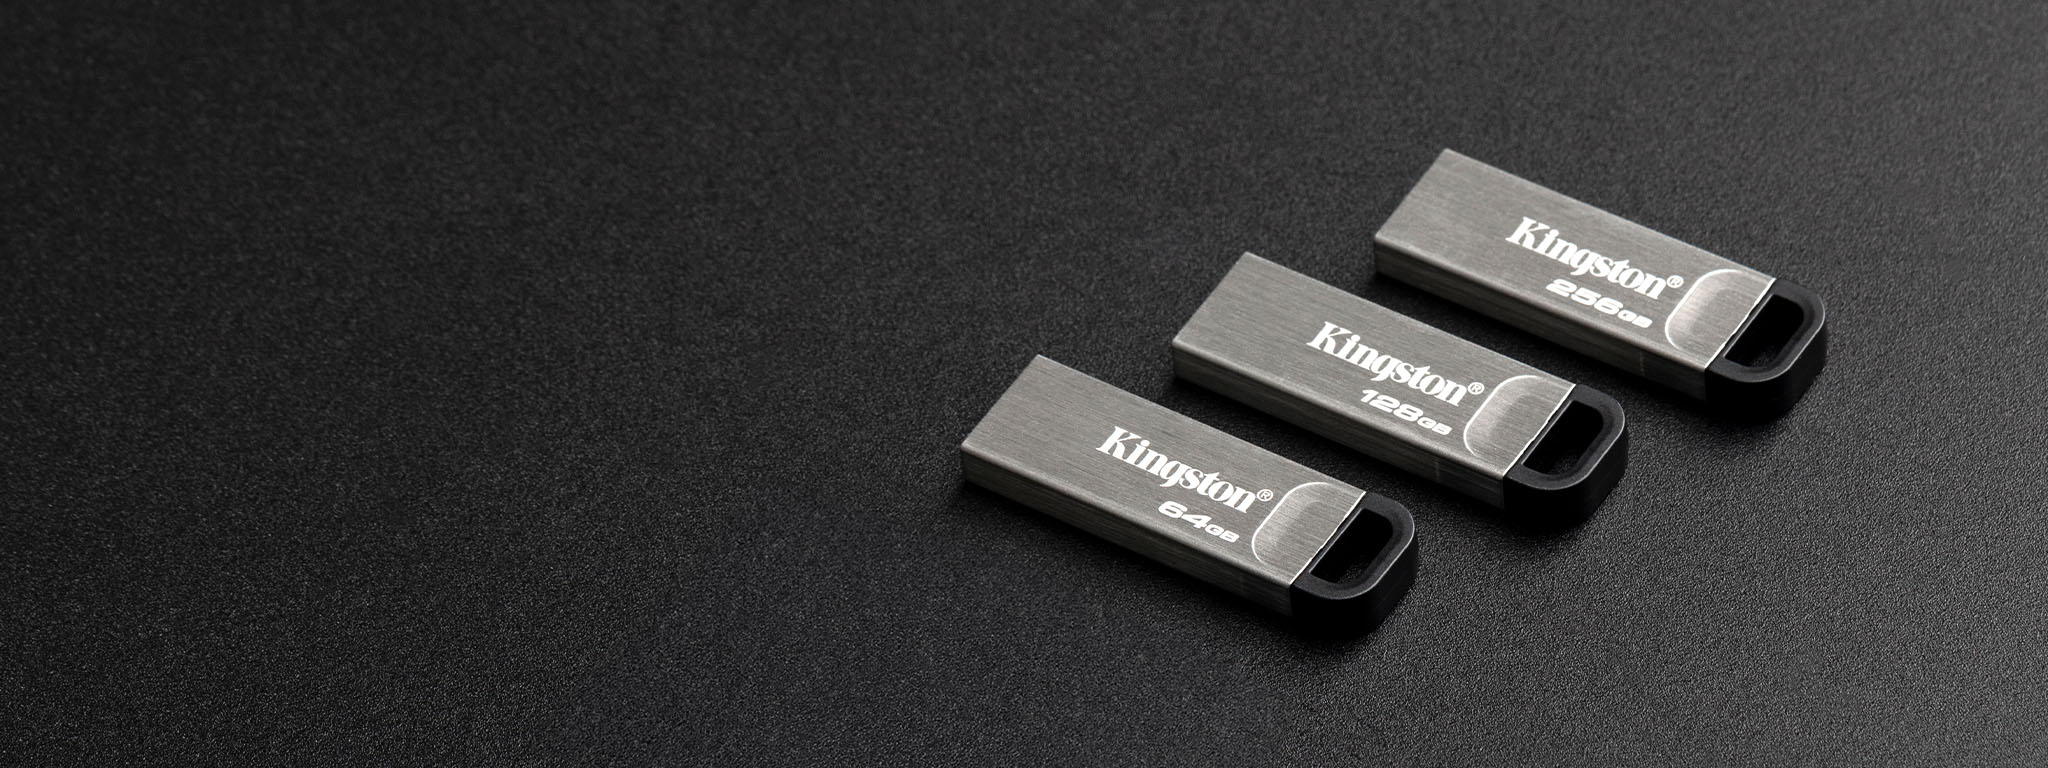 Pandangan atas pada empat flash disk USB DT Kyson dengan kapasitas berbeda yang diletakkan pada permukaan hitam